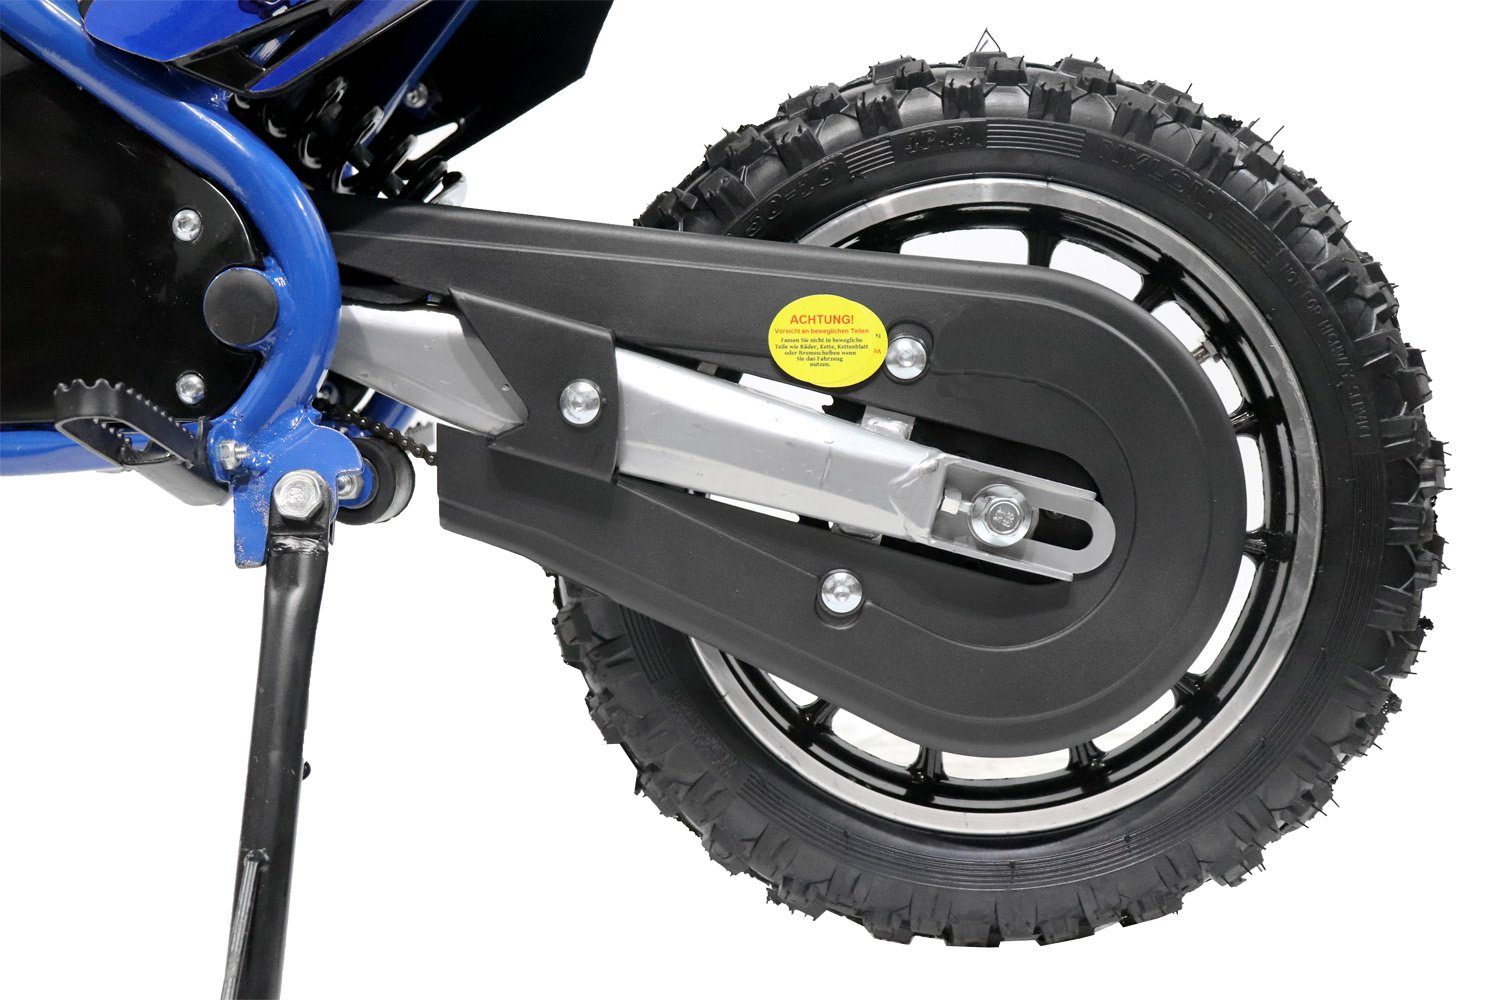 Nitro Motors Dirt-Bike Elektro 500W Serval Pocketbike Crossbike, Grün 1 Dirtbike Kinder 10" Eco Automatikschaltung Gang, mini